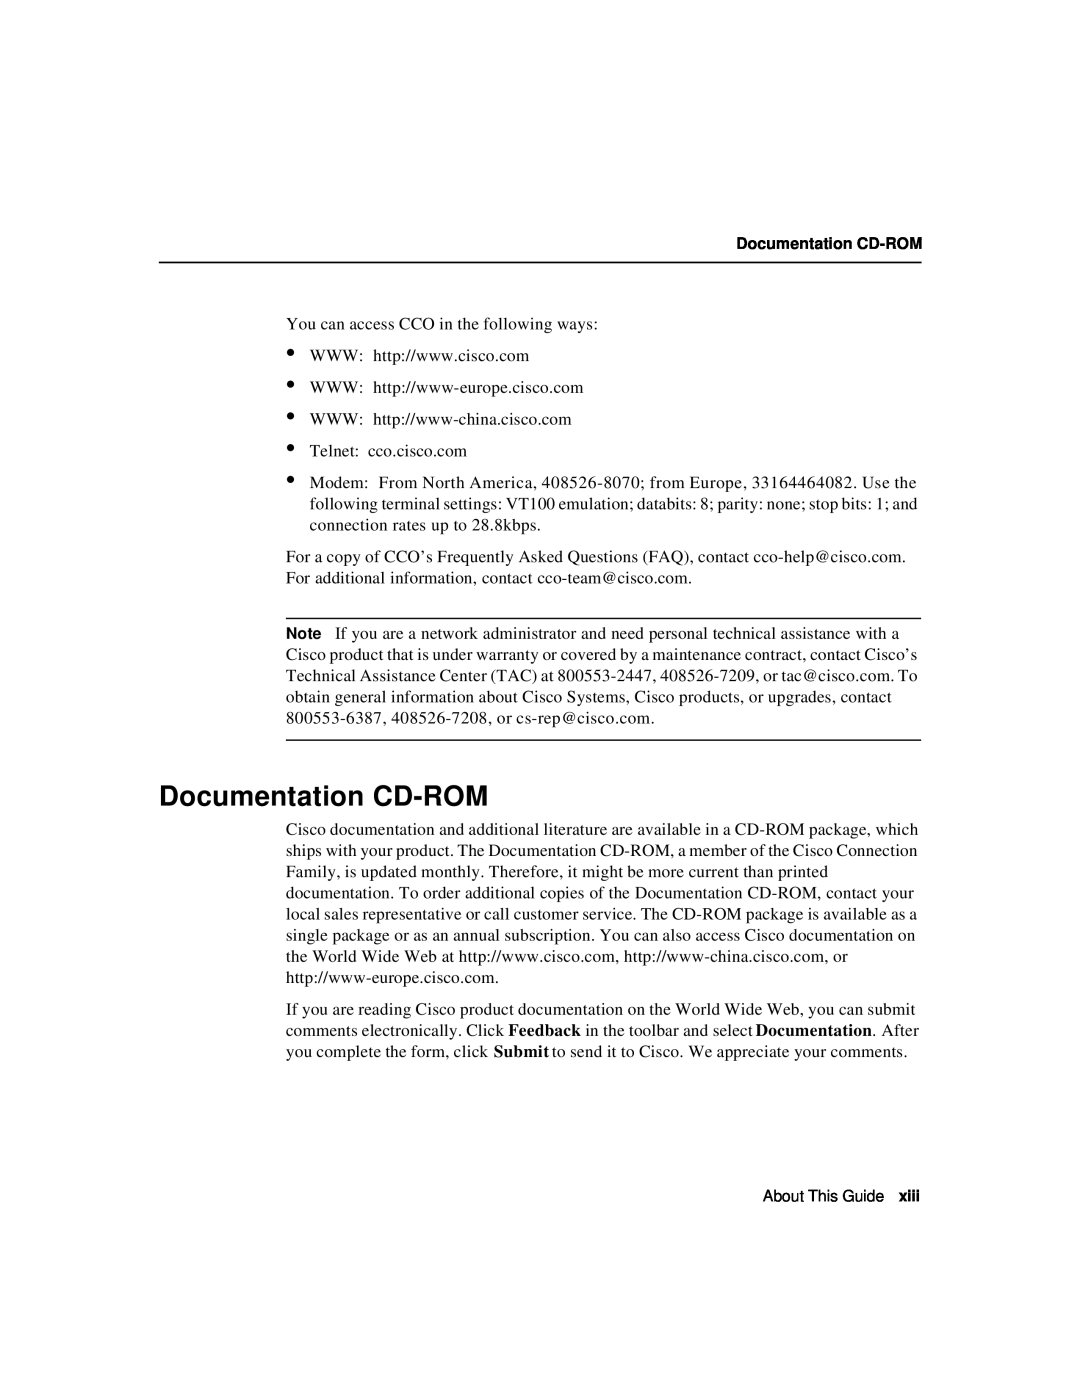 Cisco Systems 78-6897-01 manual Documentation CD-ROM 